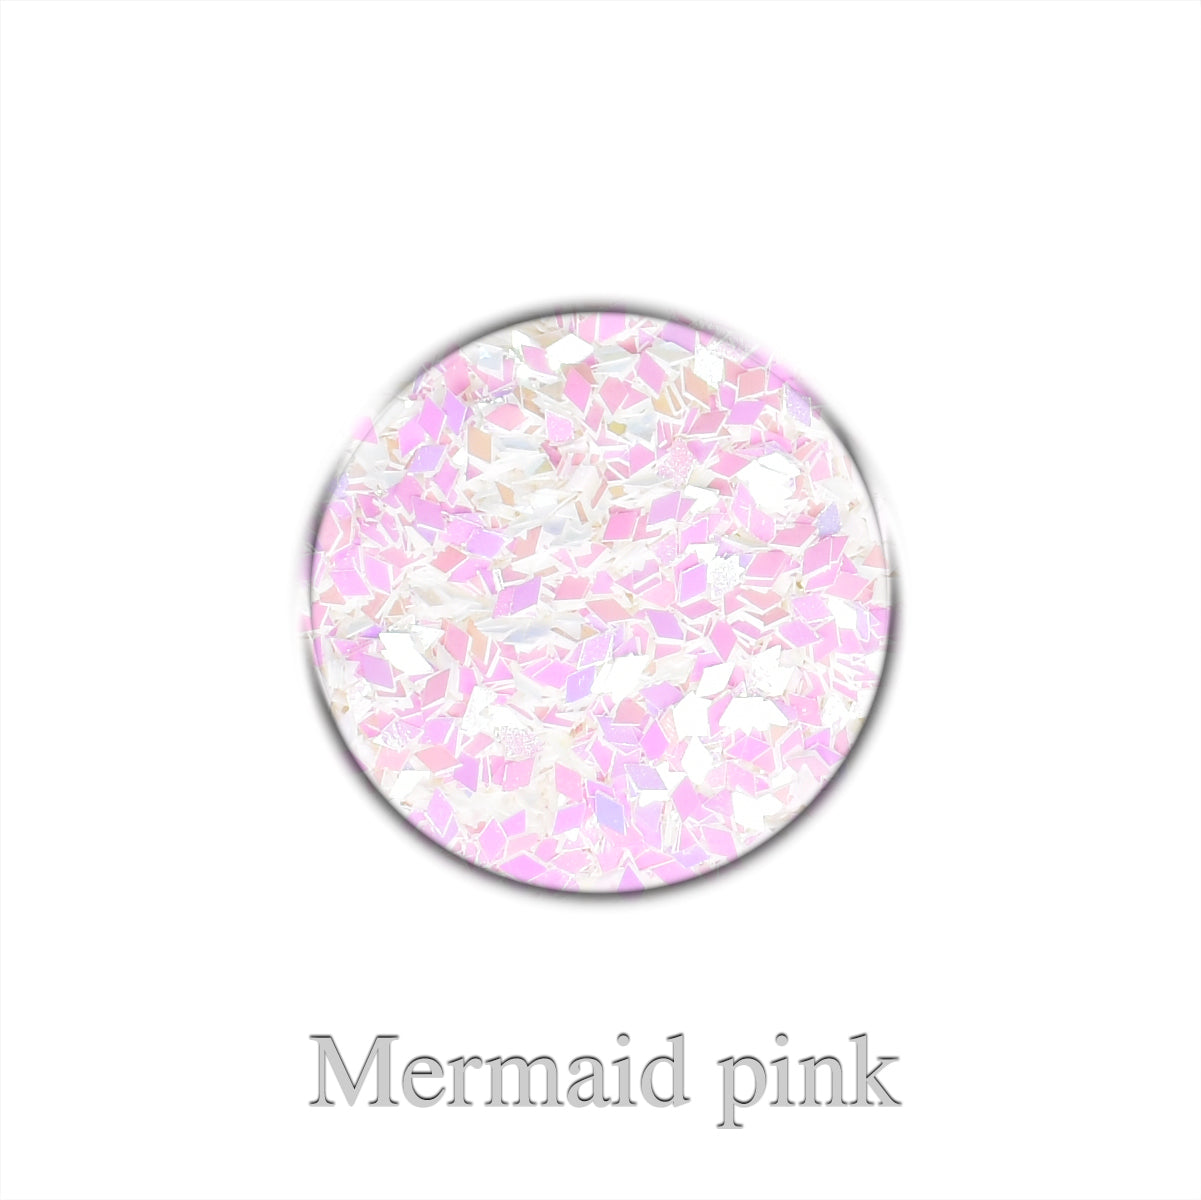 Chrome Rhombus Mini - Mermaid pink